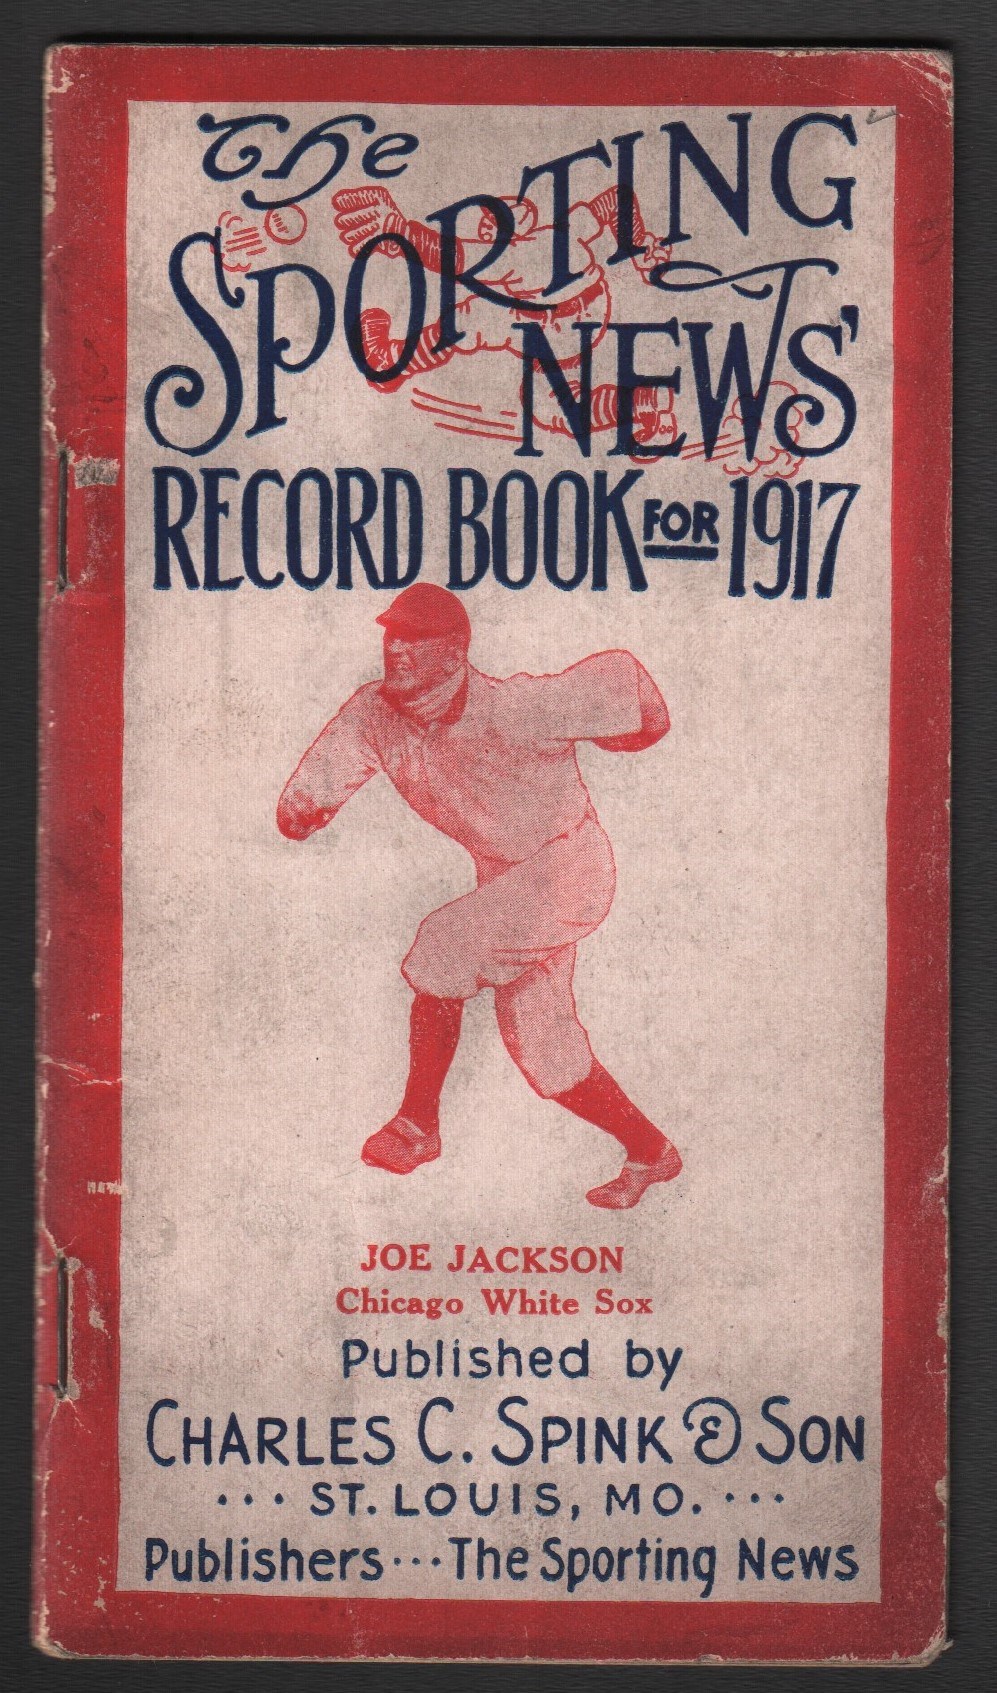 - RARE Sporting News 1917 Record Book with Joe Jackson Cover